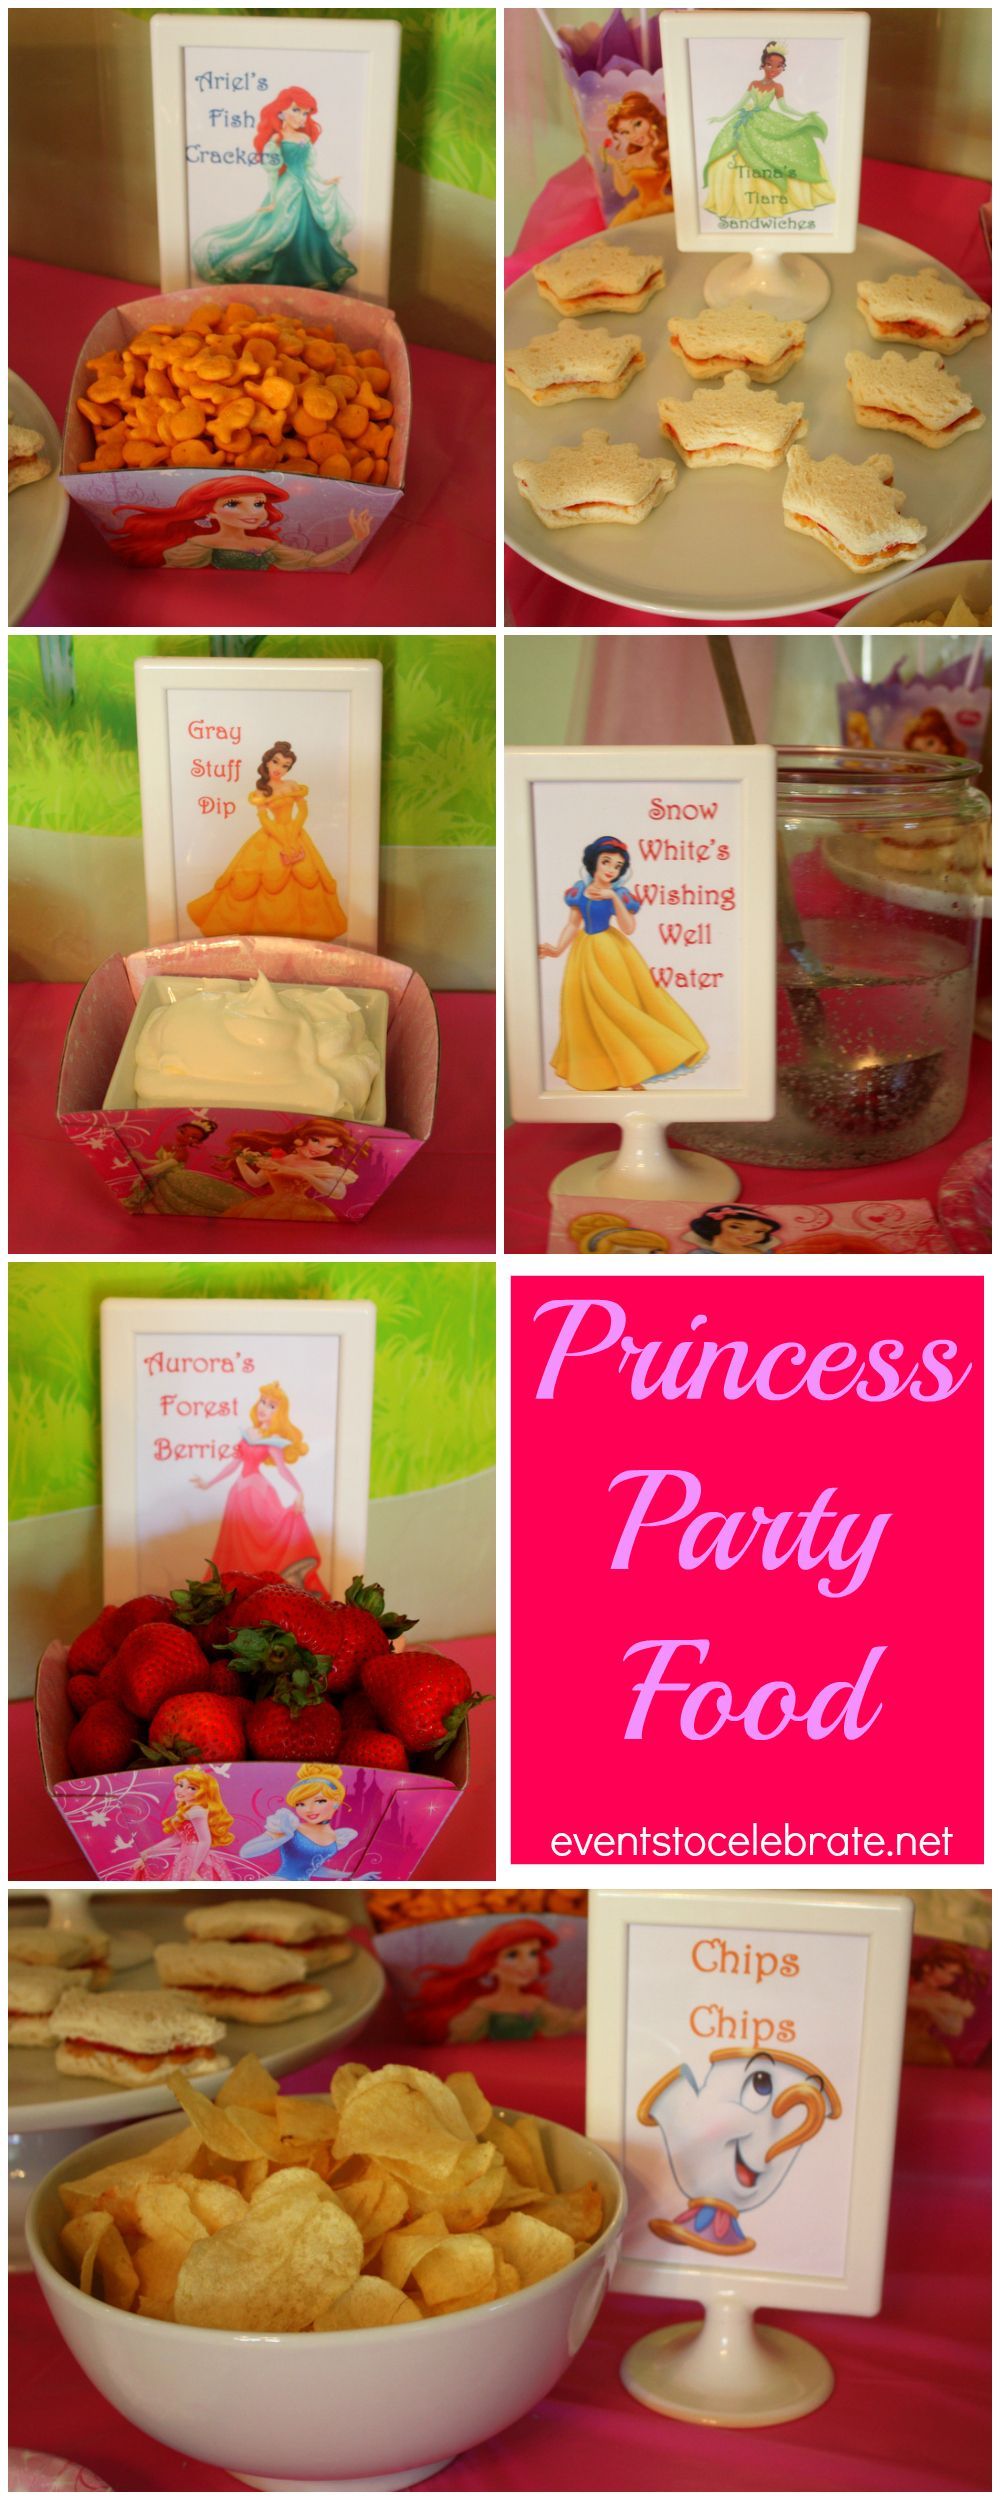 Disney Princess Birthday Party Ideas: Food & Decorations -   Princess Party Ideas